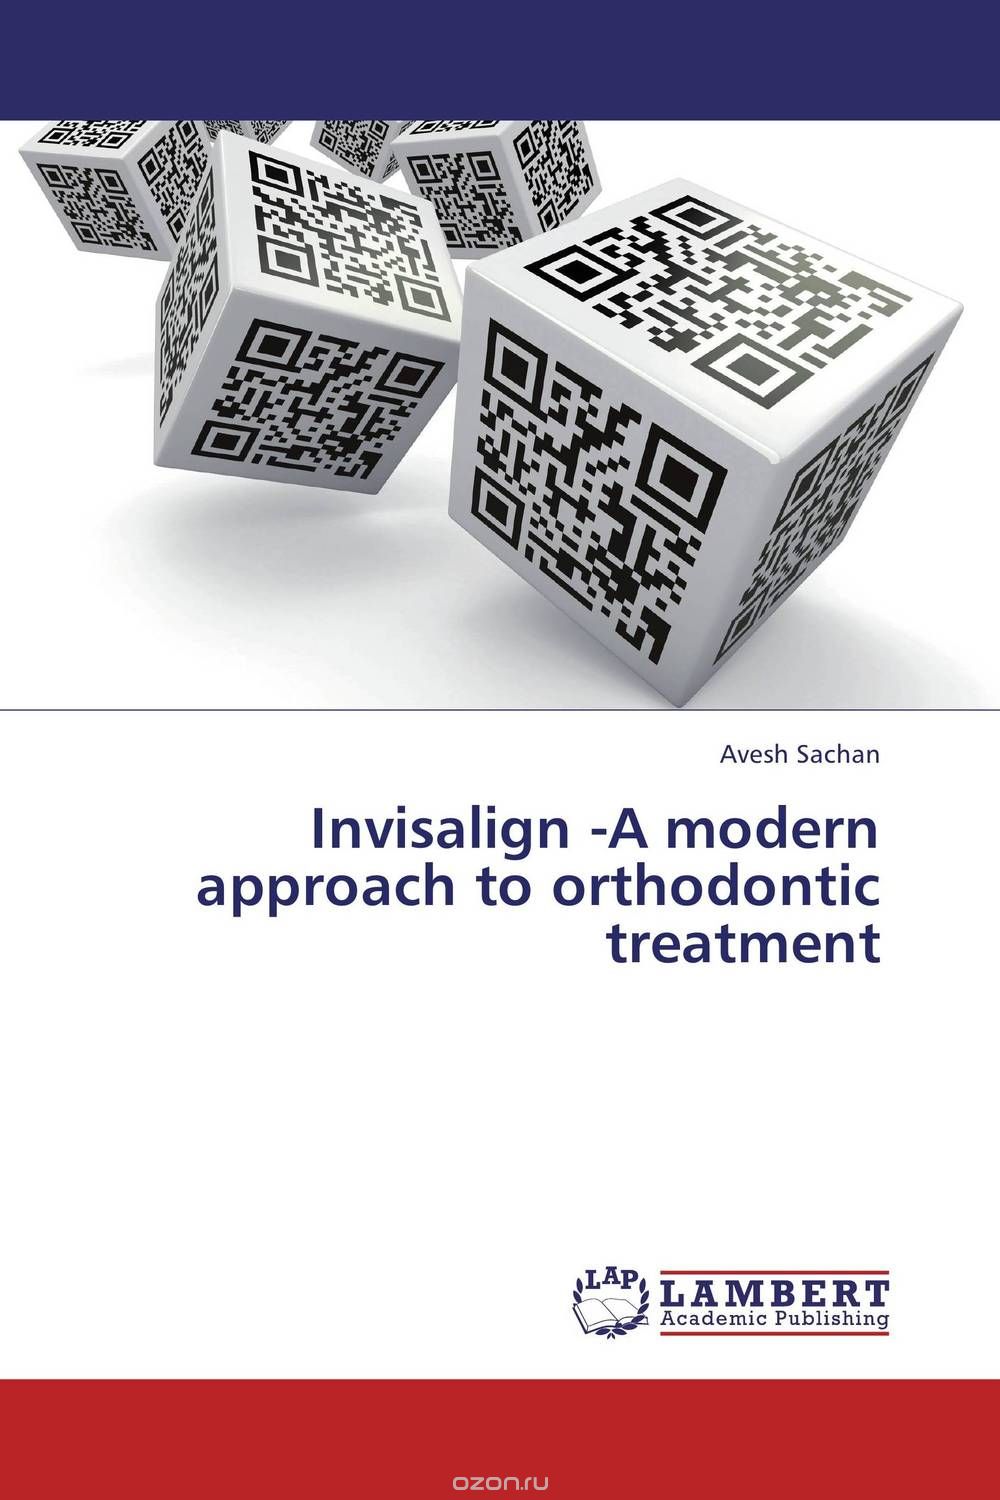 Скачать книгу "Invisalign -A modern approach to orthodontic treatment"